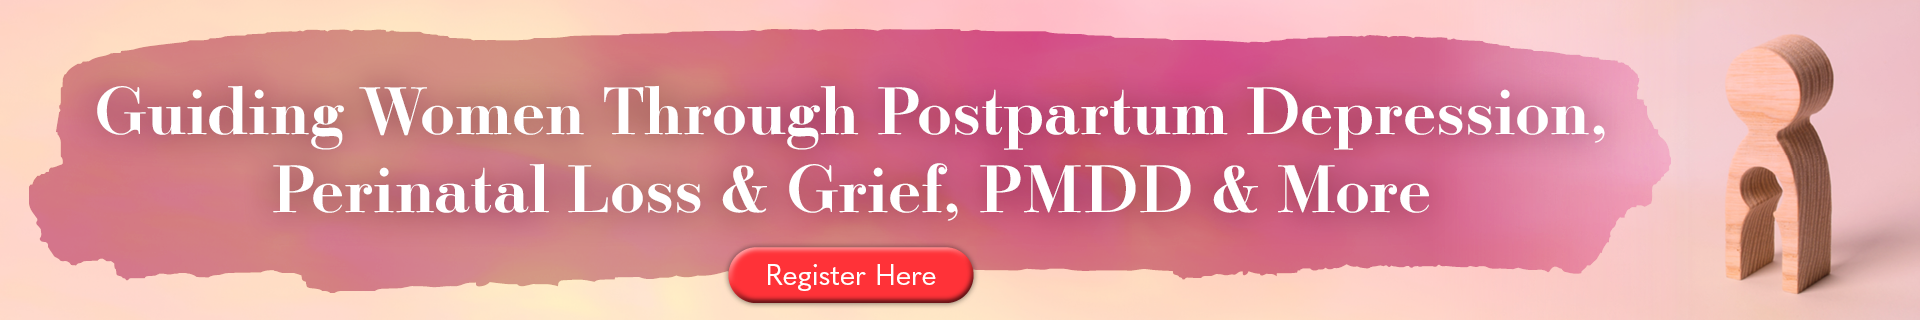 Guiding Women Through Postpartum Depression, Perinatal Loss & Grief, PMDD & More